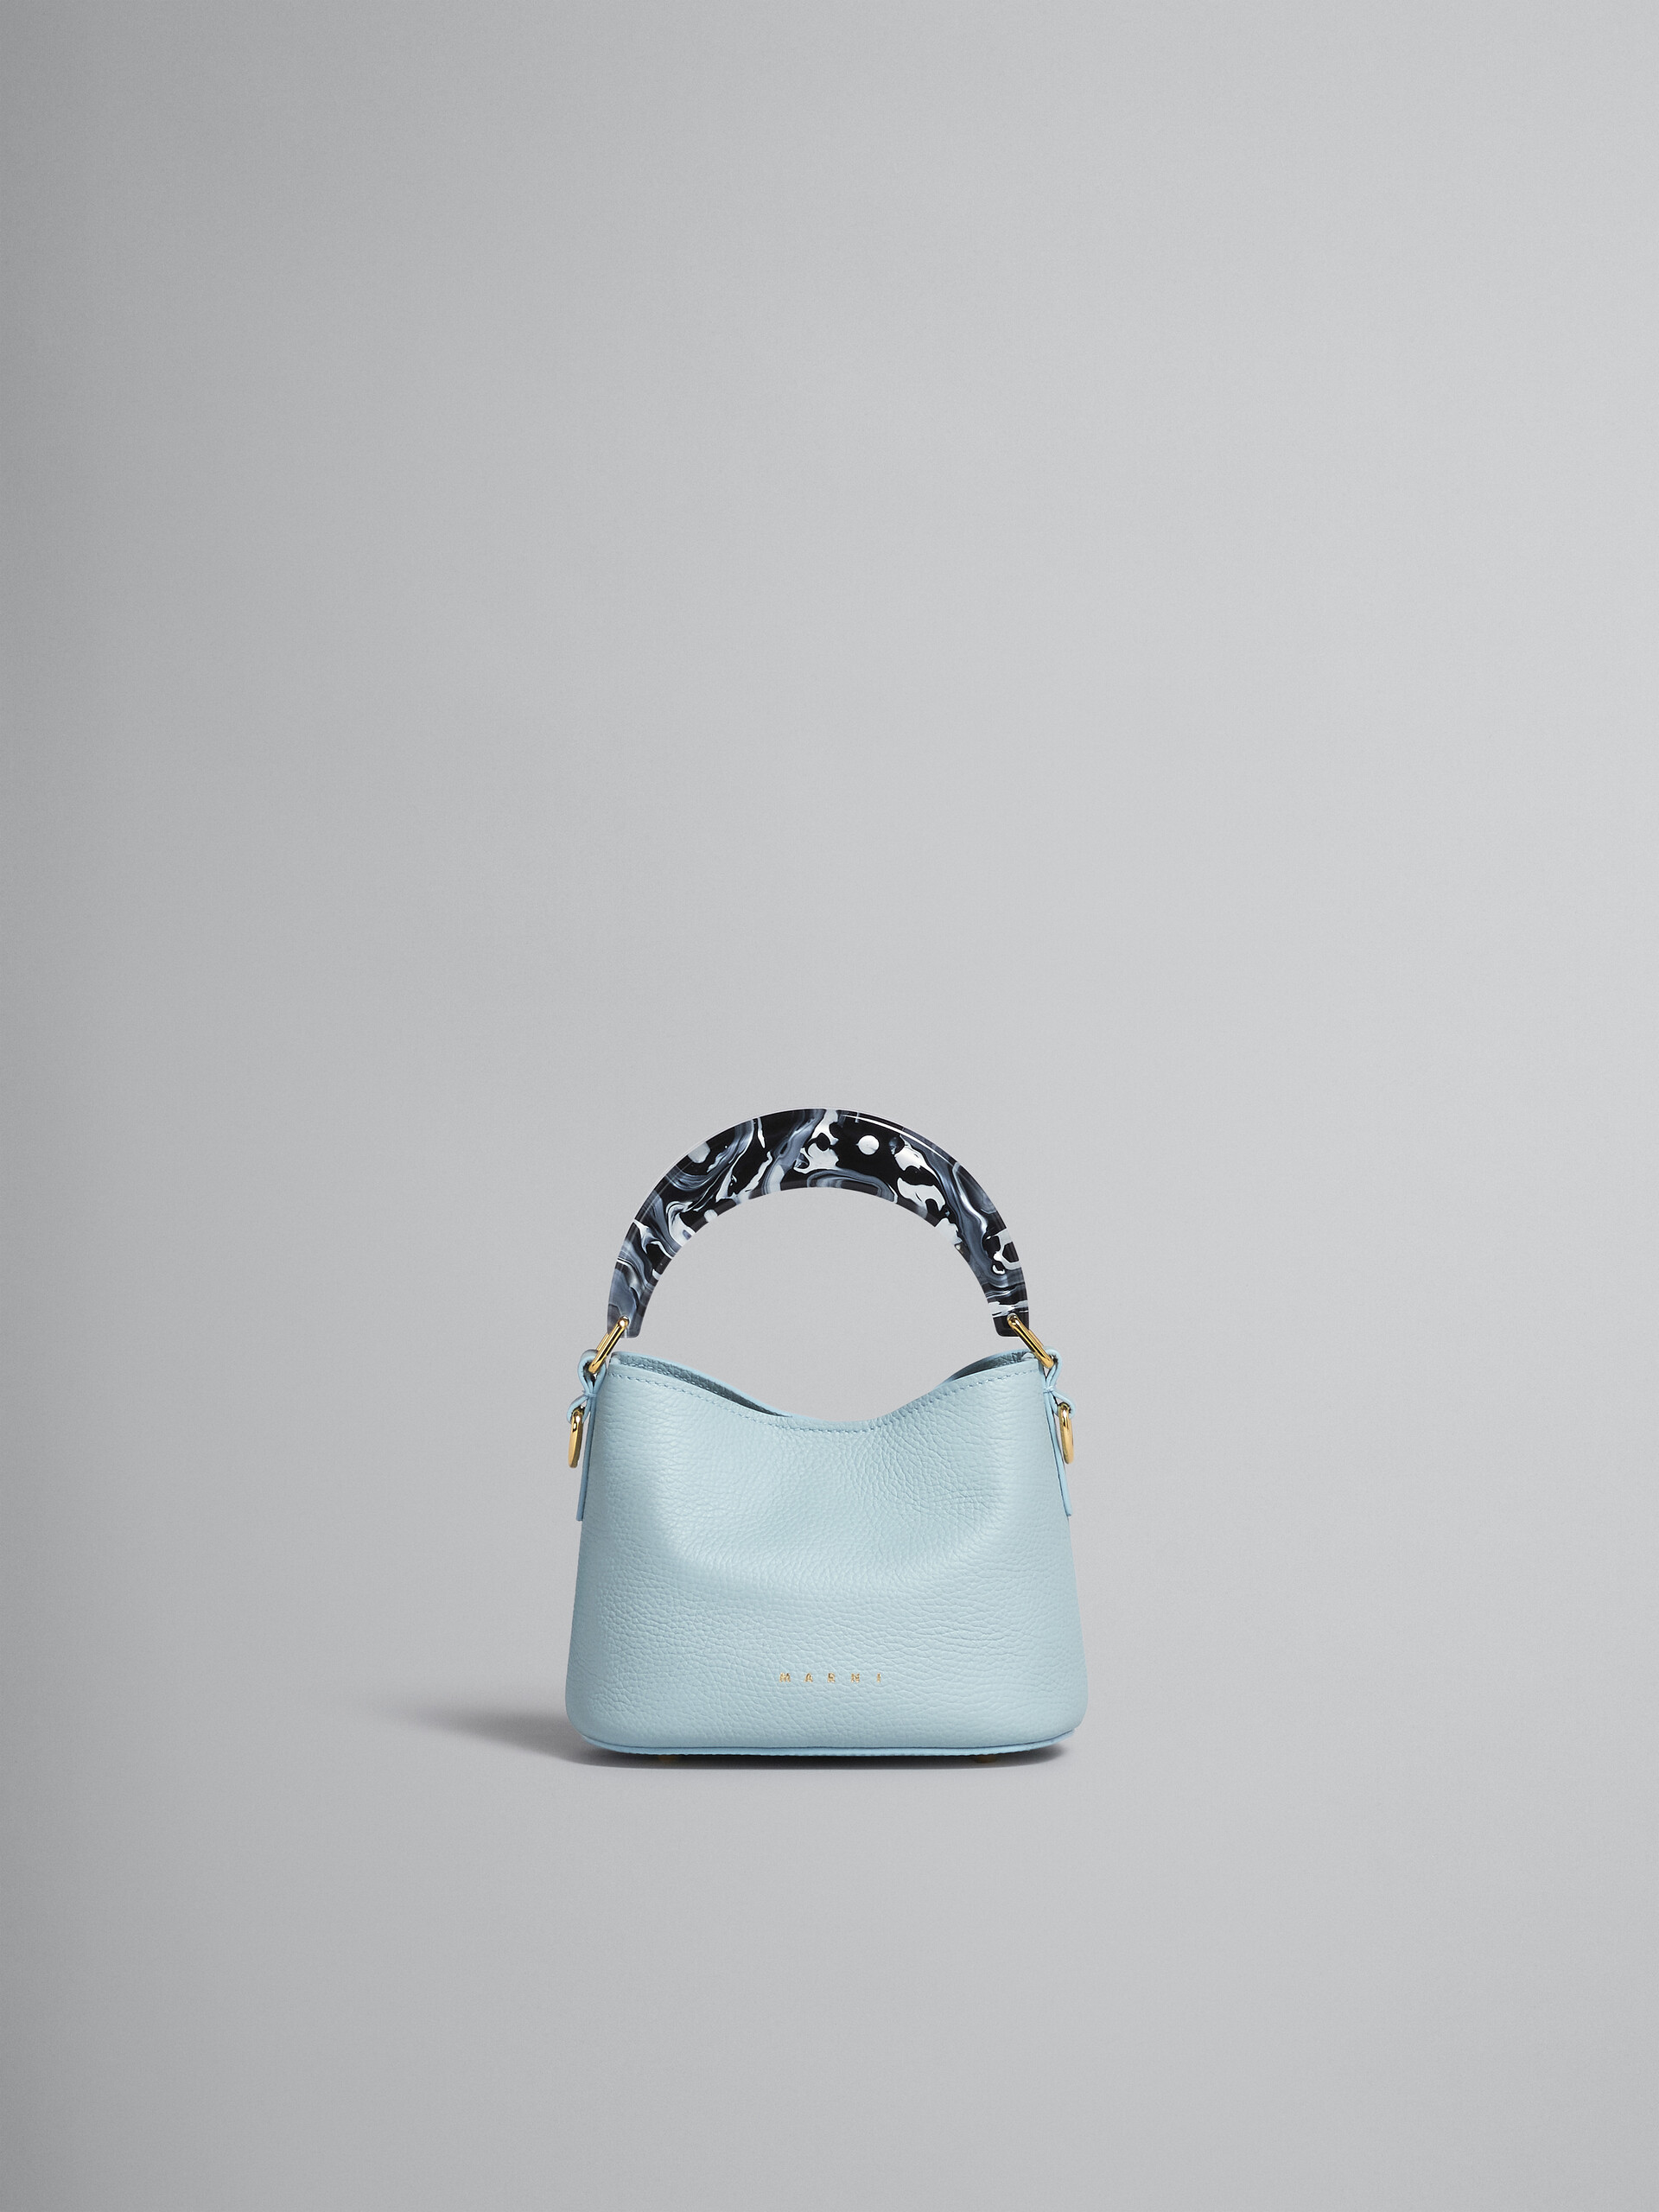 Venice Mini Bucket Bag in light blue leather - Shoulder Bags - Image 1